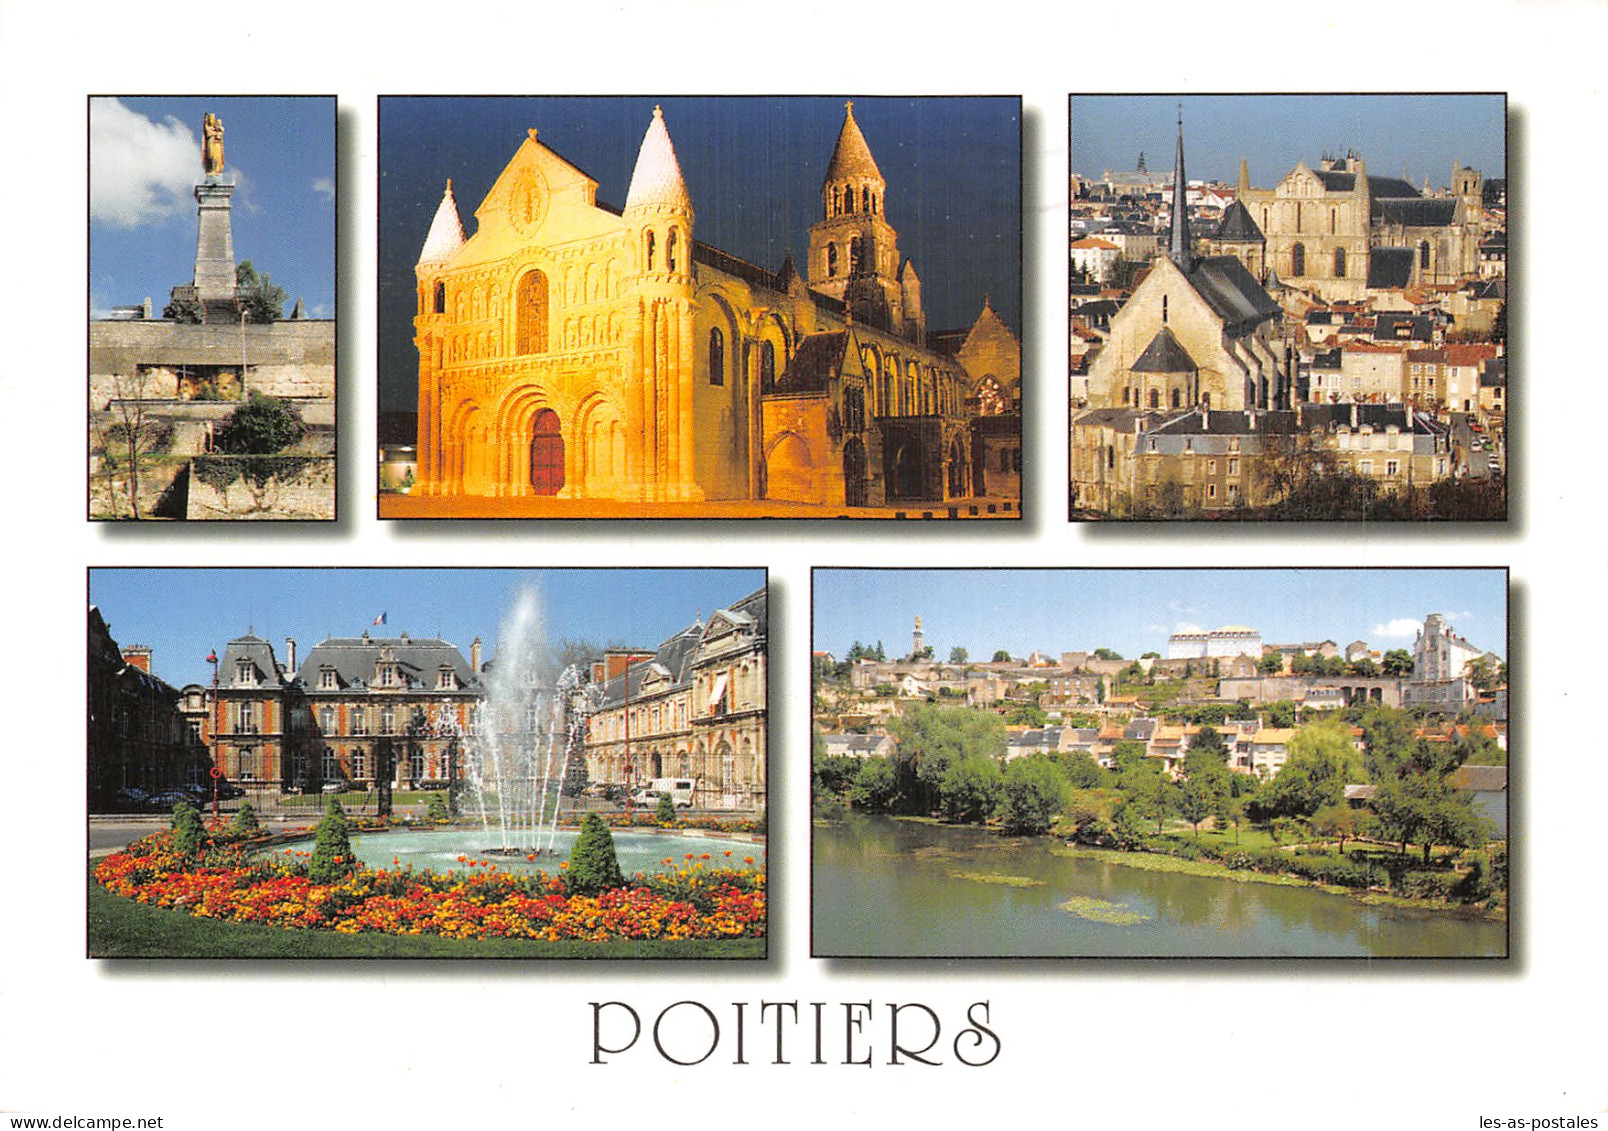 86 POITIERS - Poitiers